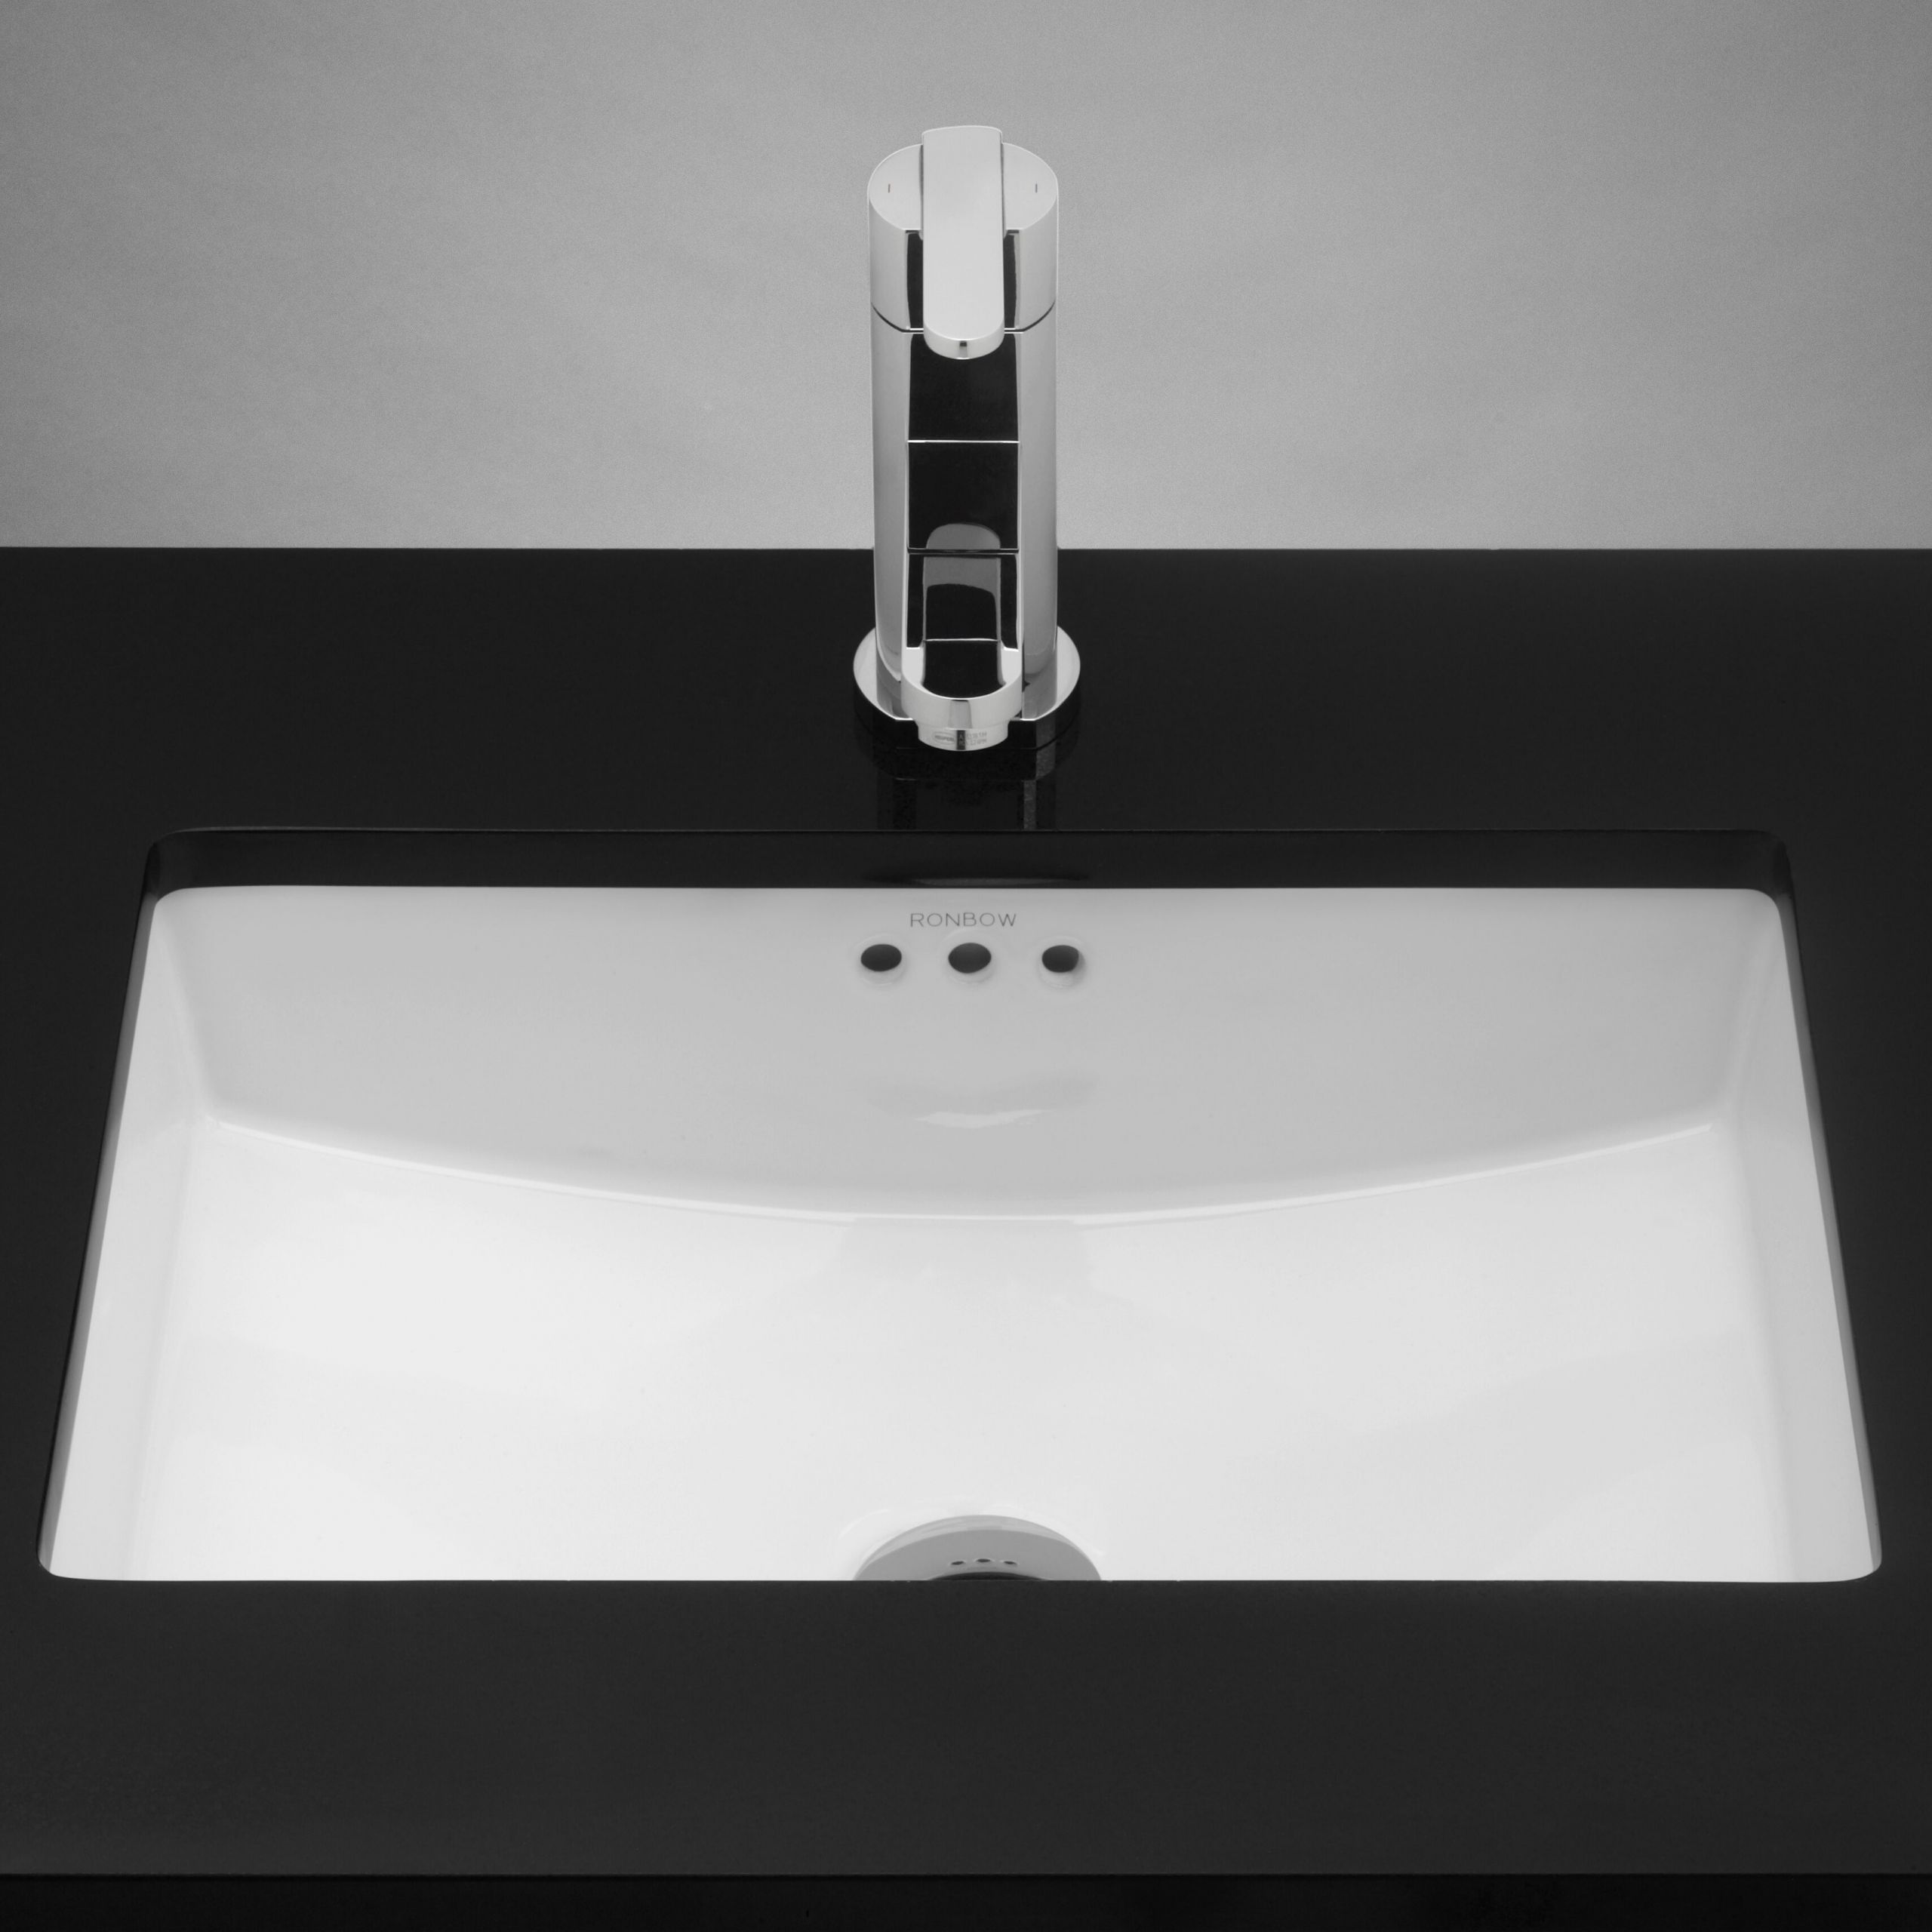 White Undermount Bathroom Sinks
 Ronbow Rectangular Ceramic Undermount Bathroom Sink in